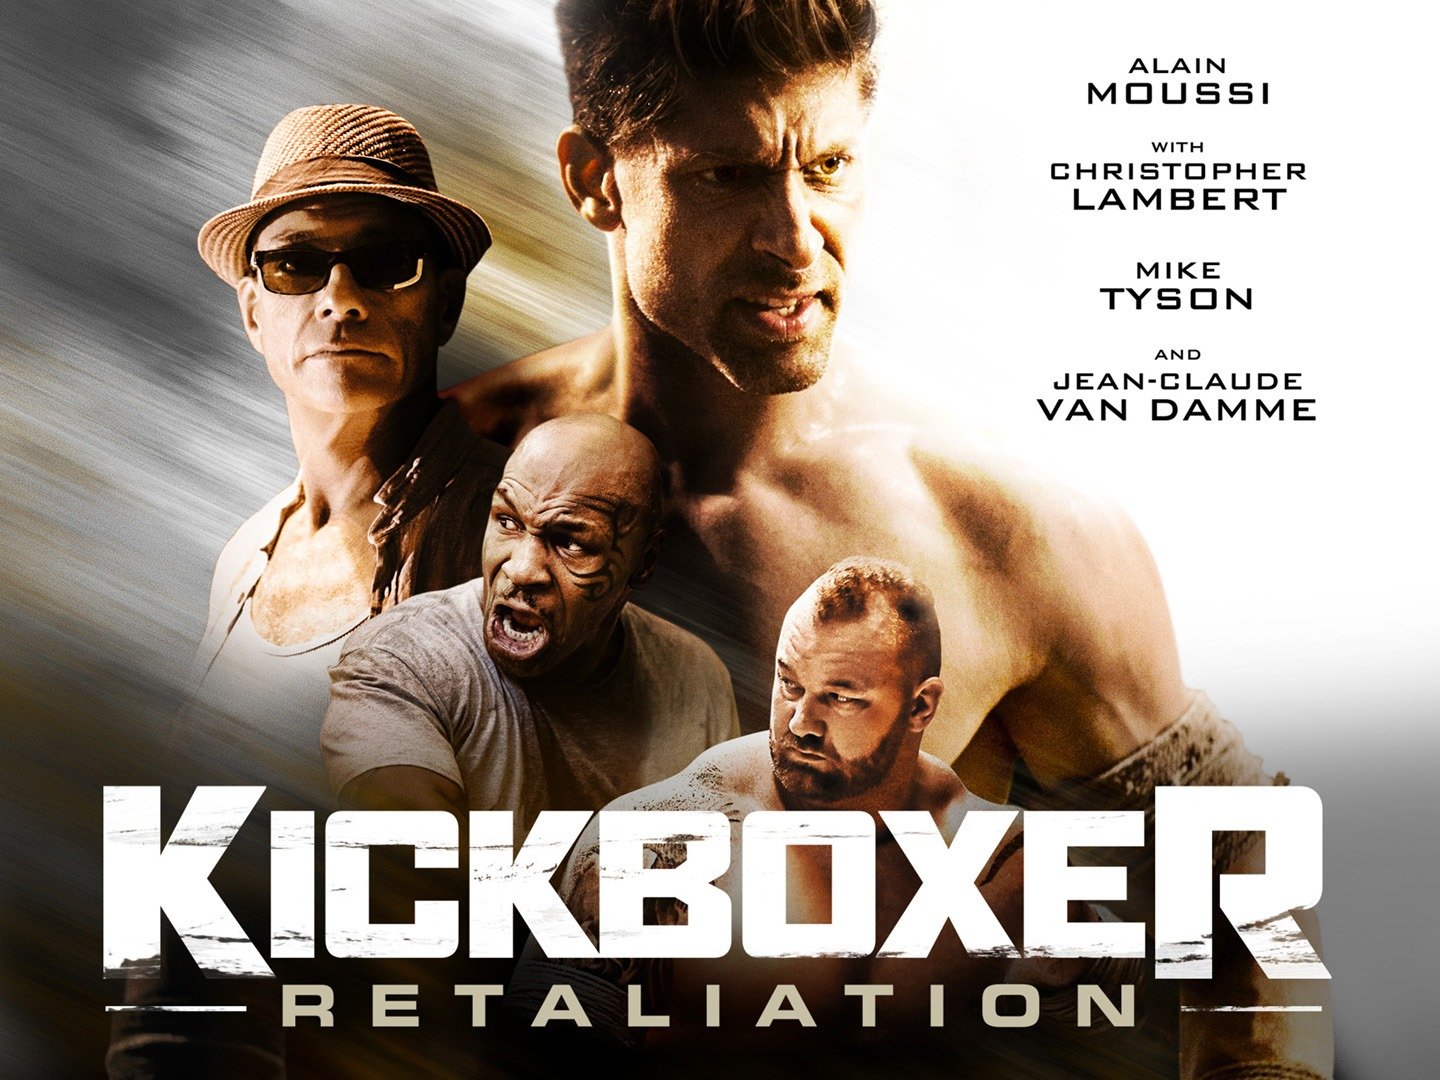 Kickboxer Retaliation Trailer 1 Trailers And Videos Rotten Tomatoes 9032